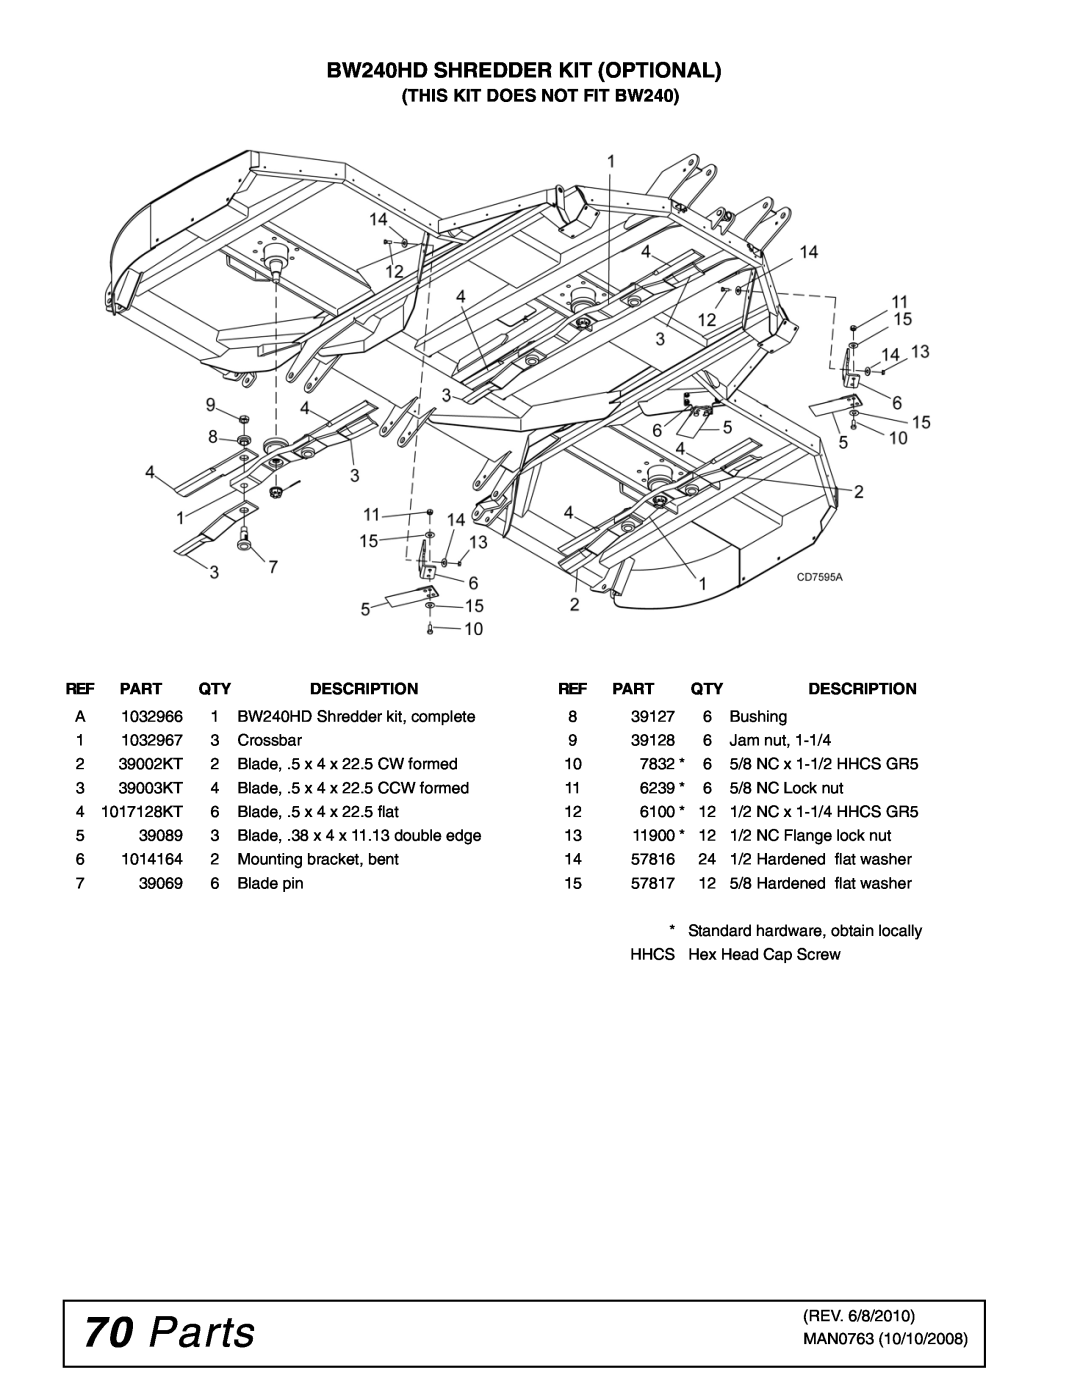 Woods Equipment BW240HDQ manual Parts, BW240HD SHREDDER KIT OPTIONAL, Description 